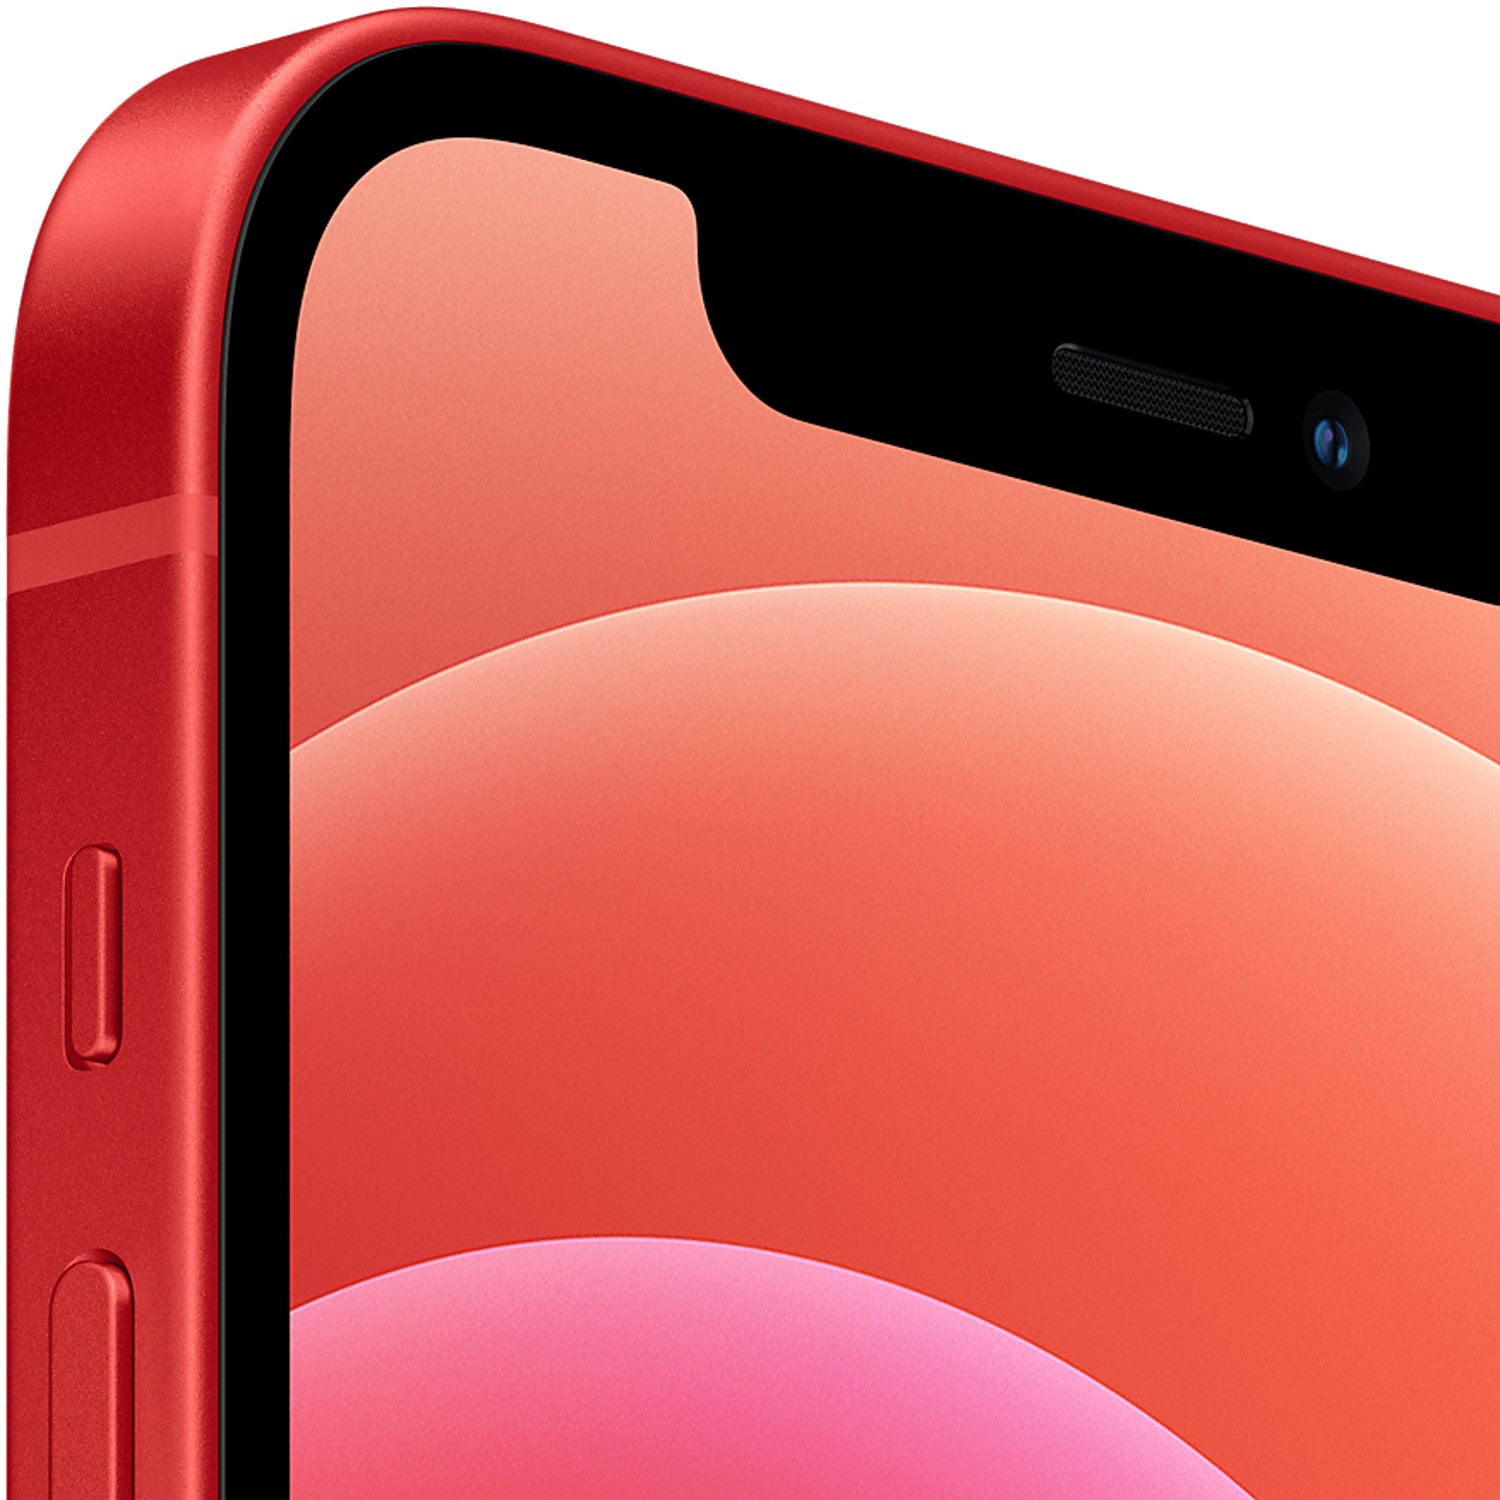 Refurbished Apple iPhone 12 Mini 64GB 5G SIM Free Smartphone - Red